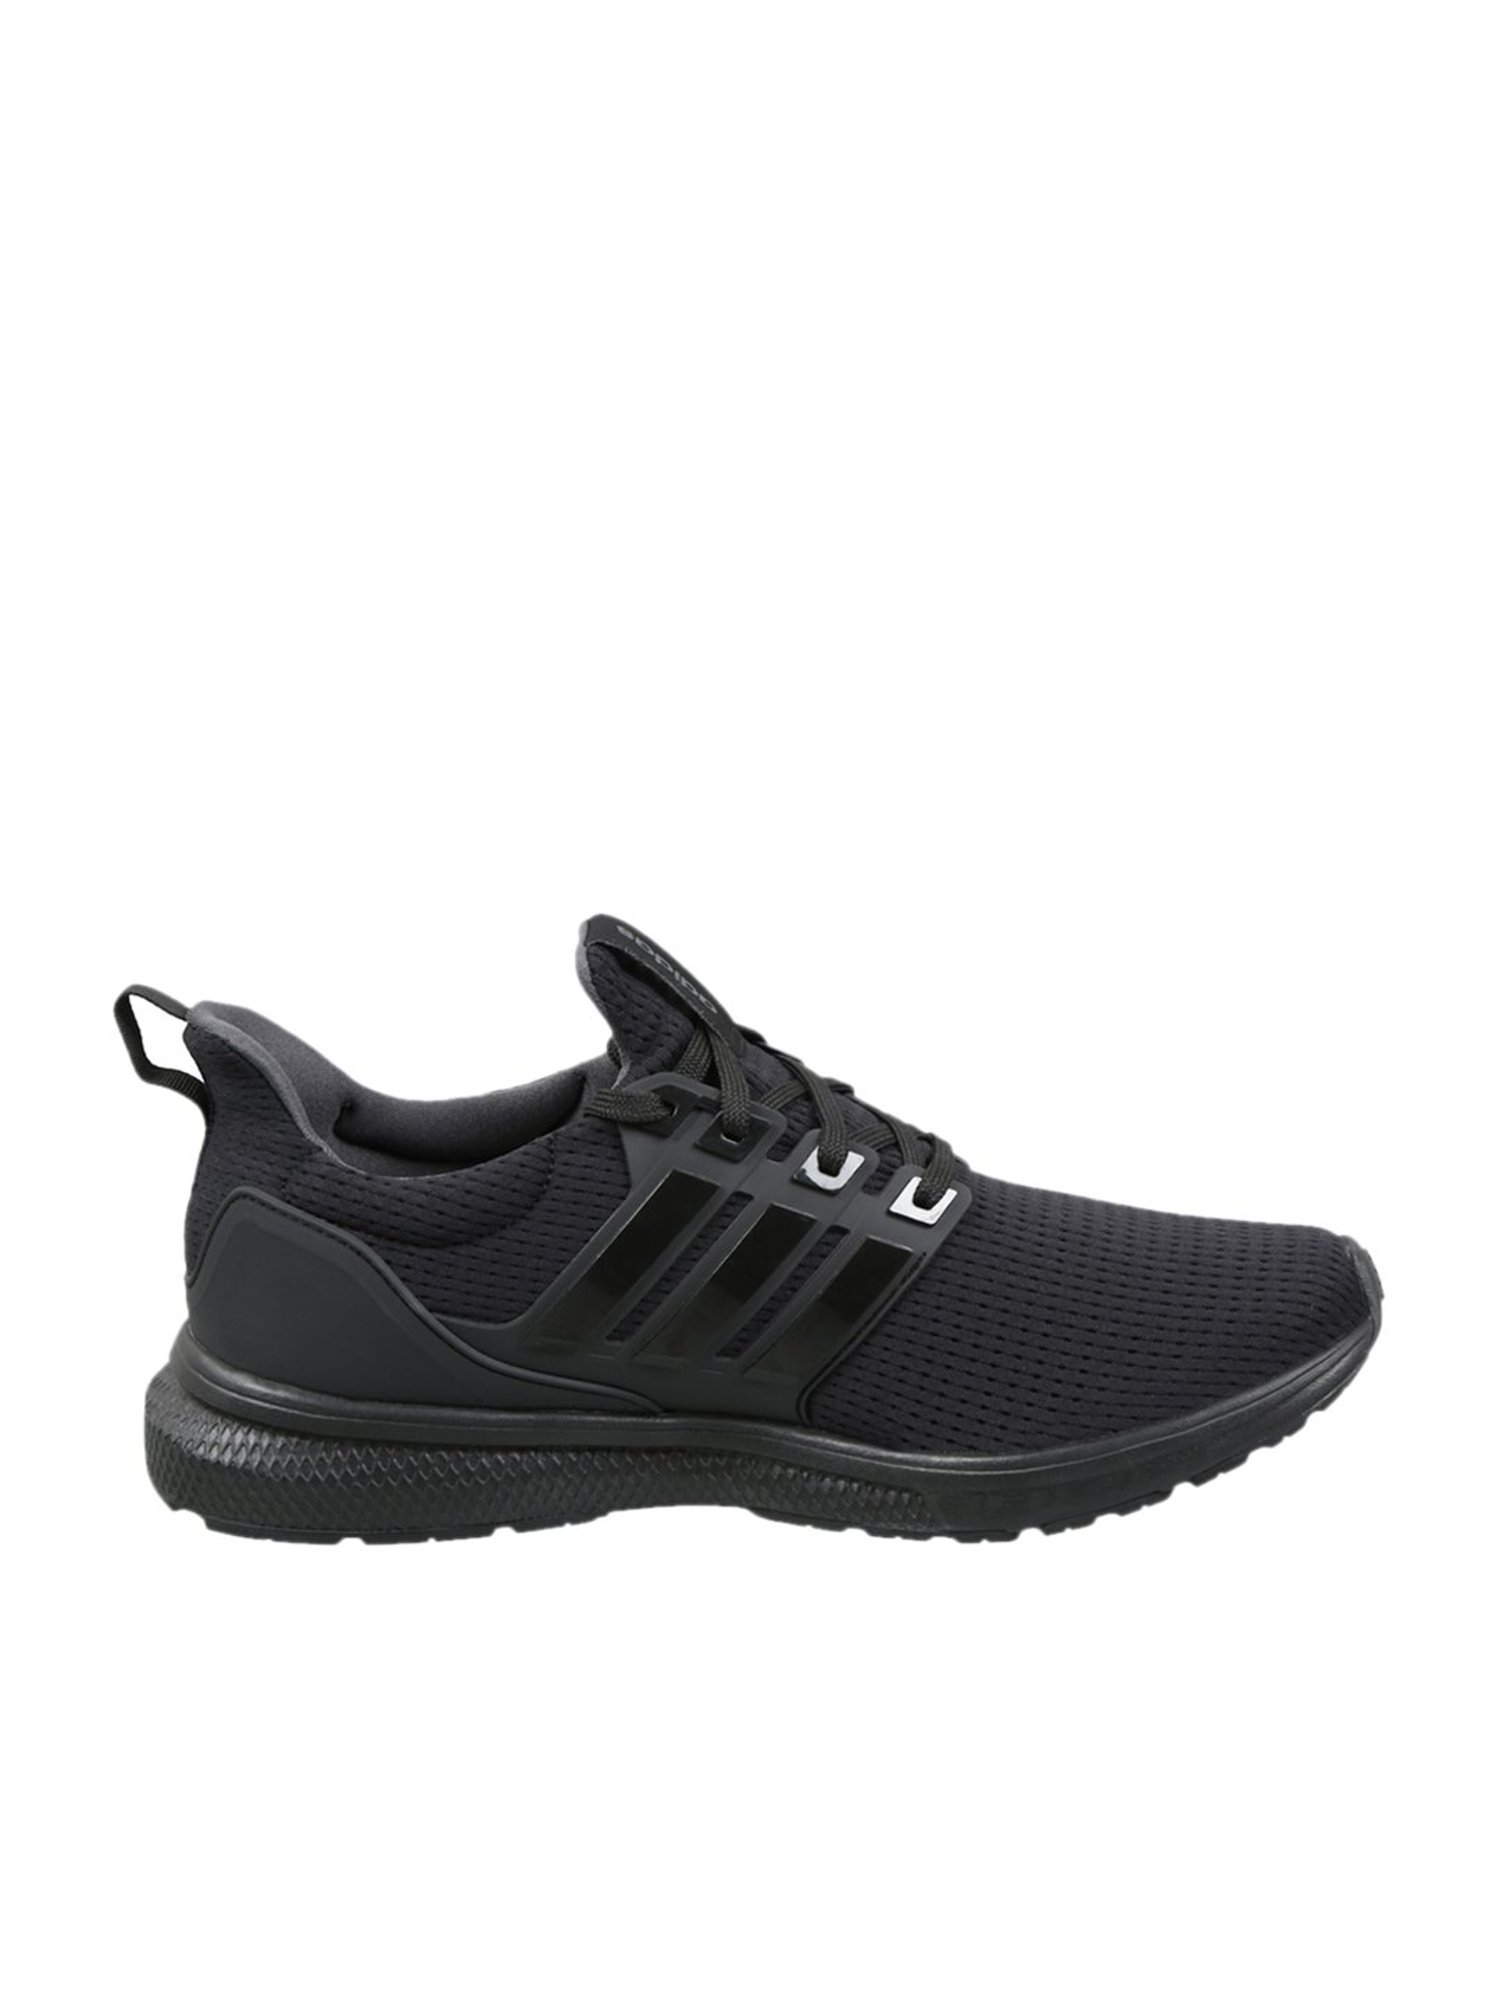 adidas jerzo running shoes